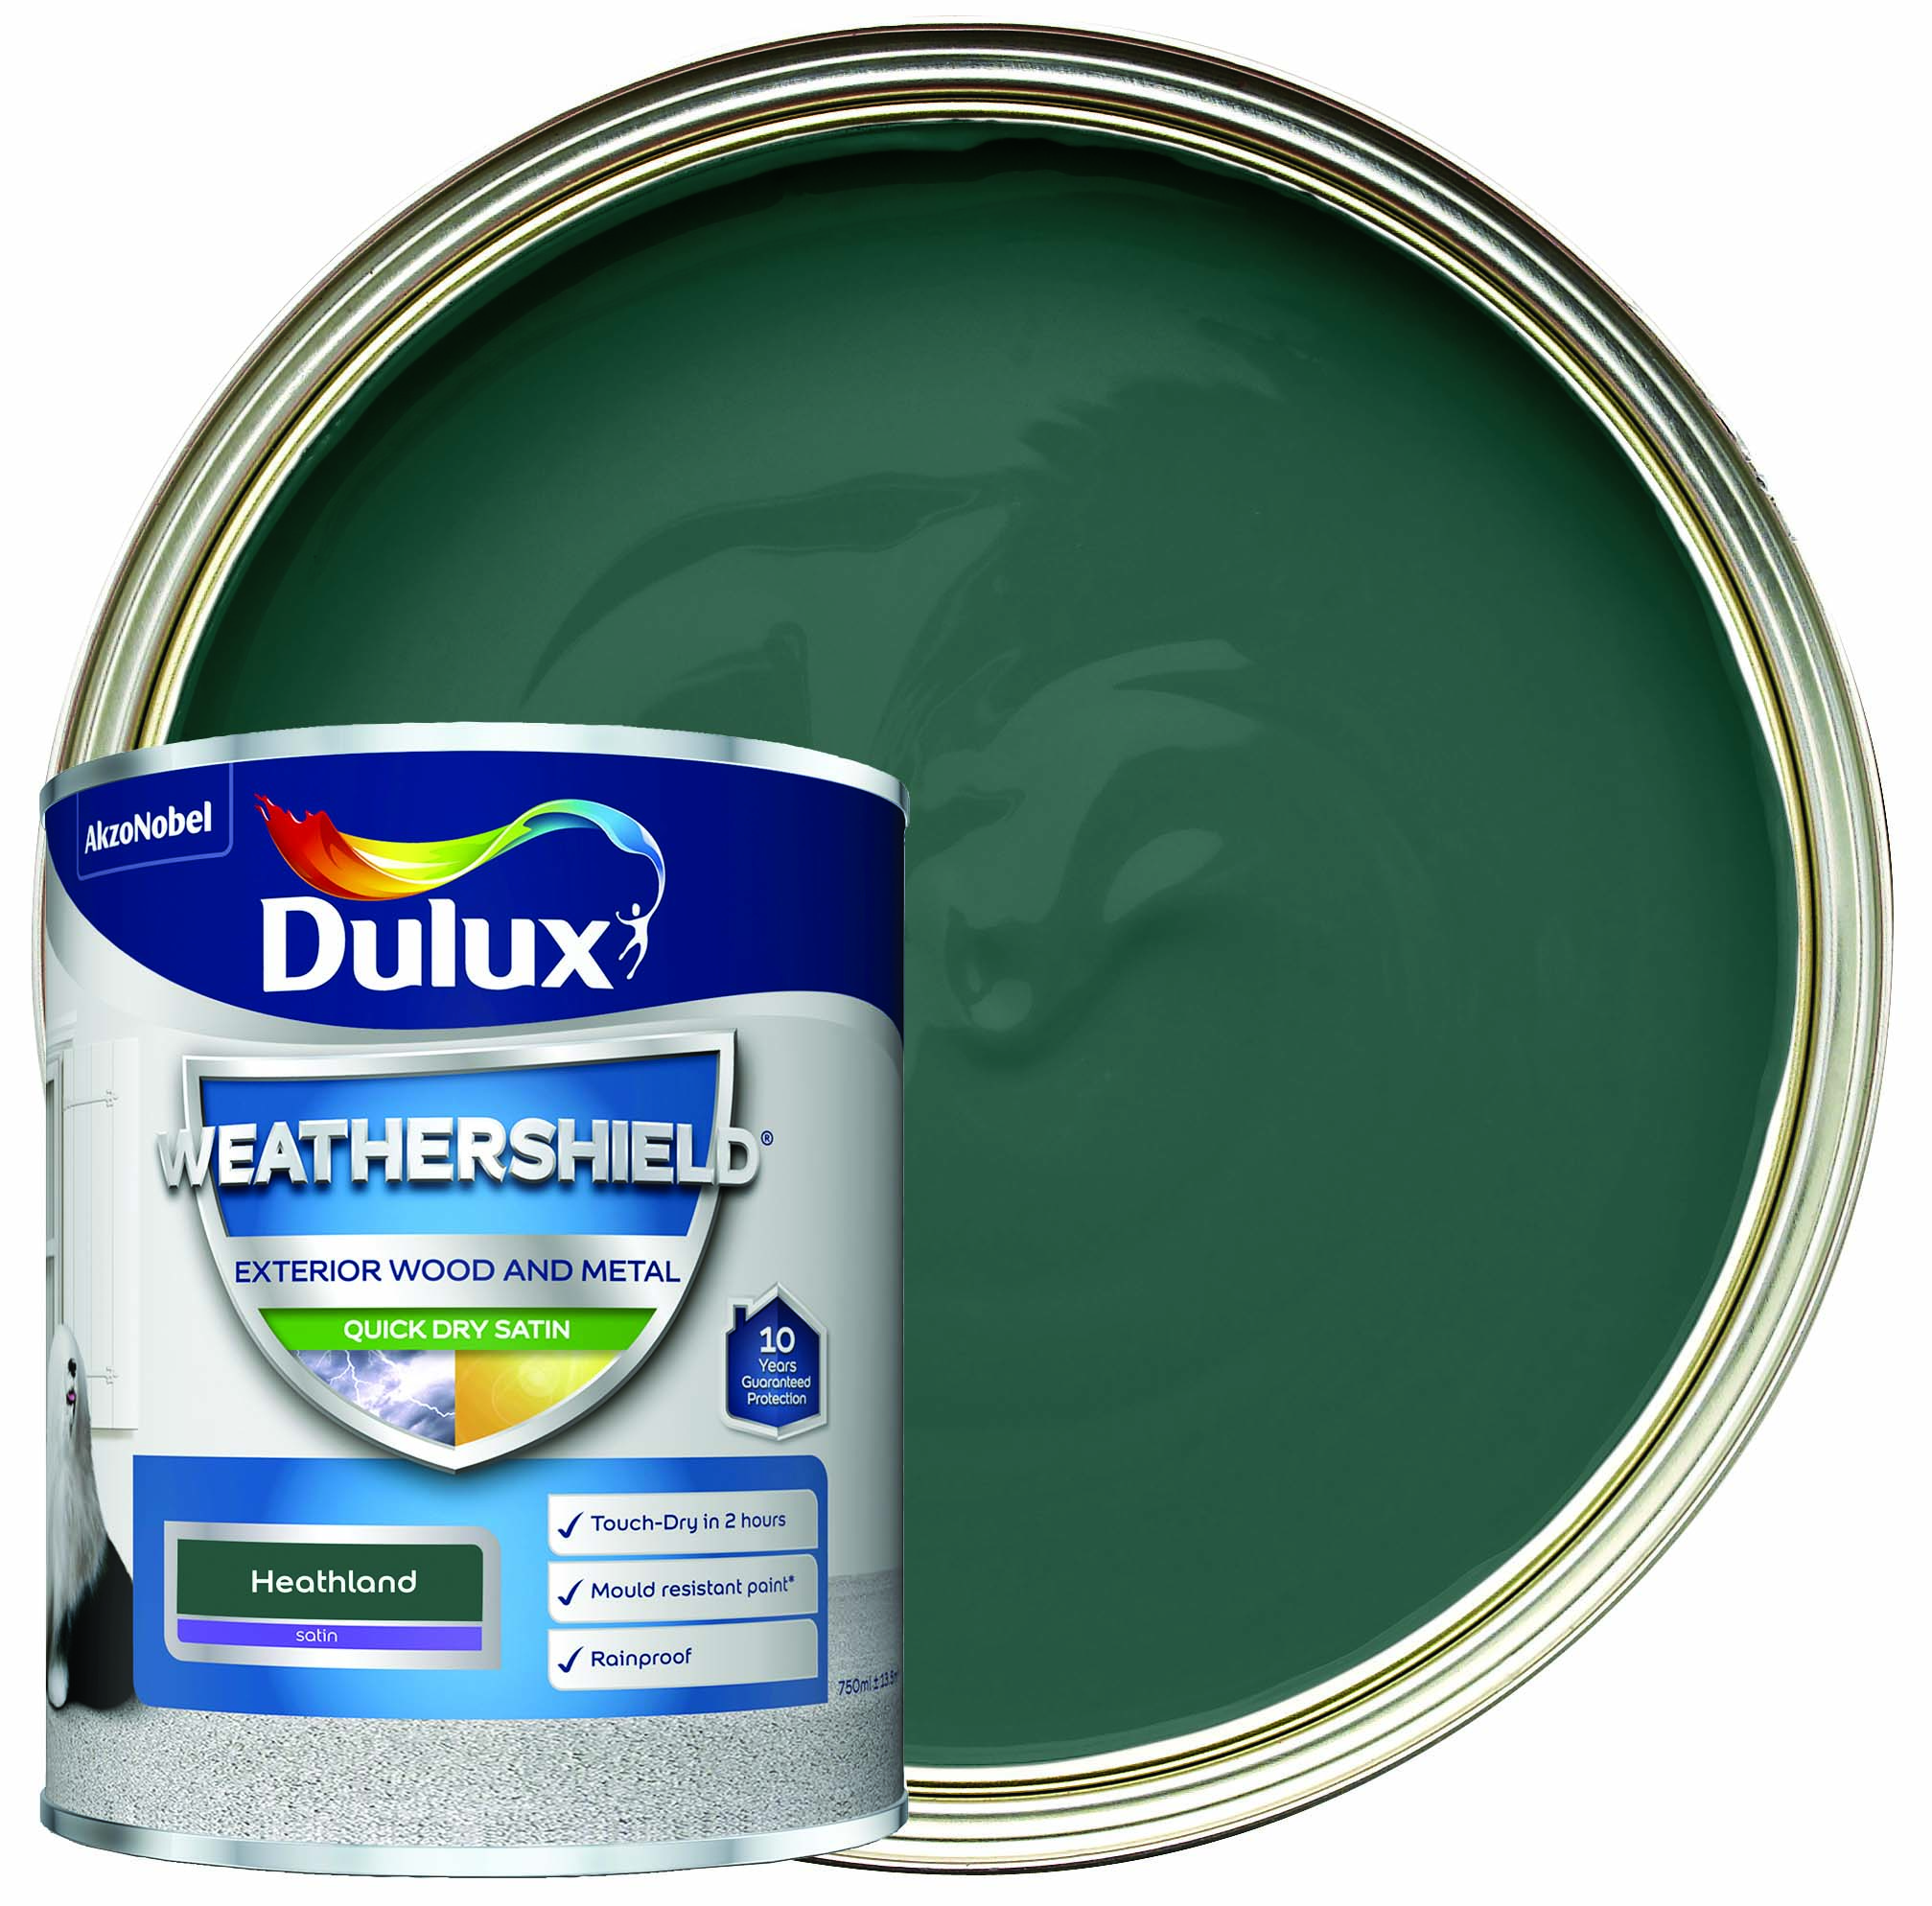 Dulux Weathershield Quick Dry Satin Paint - Heathland - 750ml